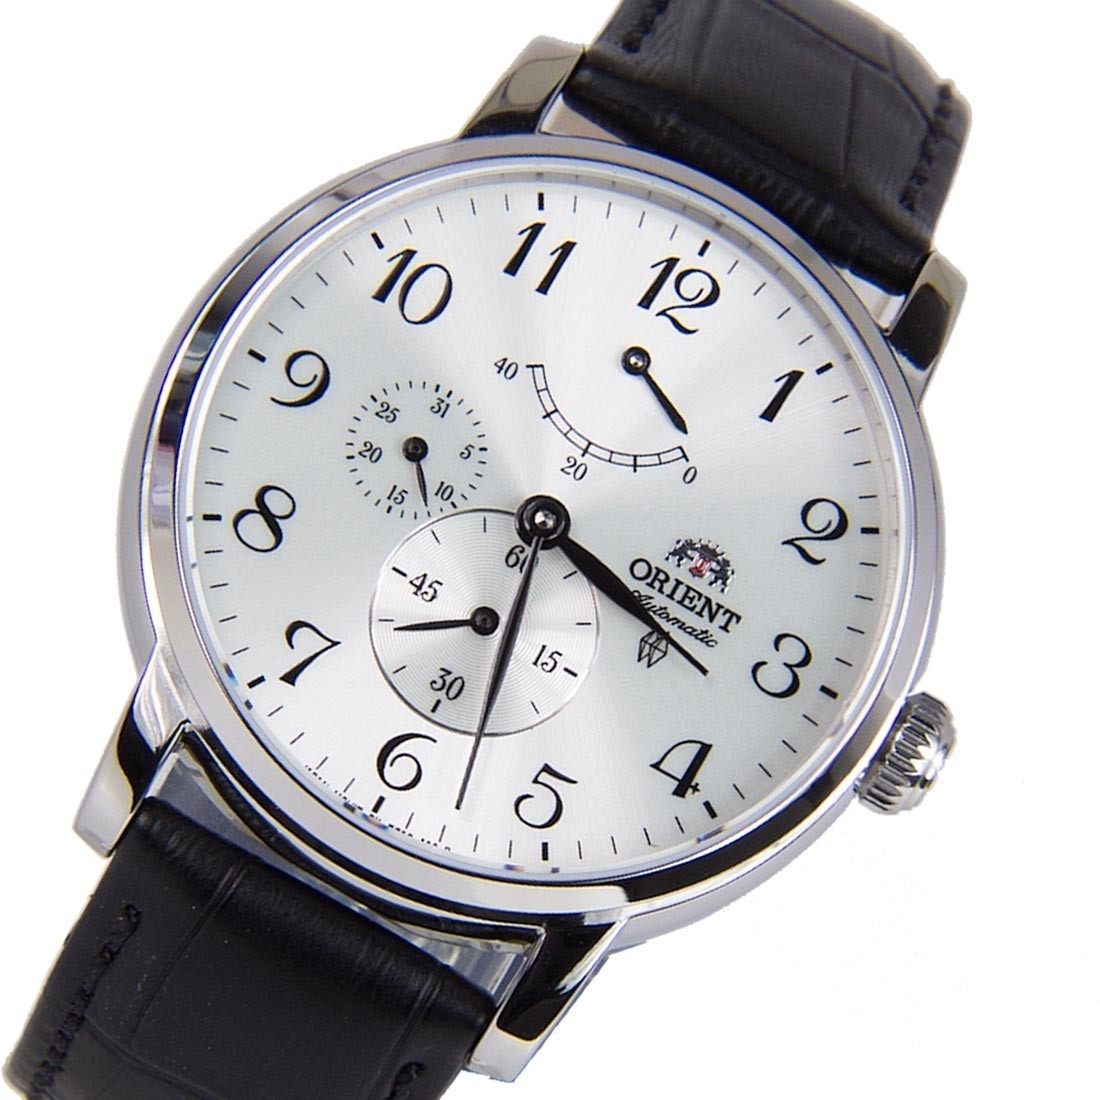 Orient часы хронограф белый циферблат